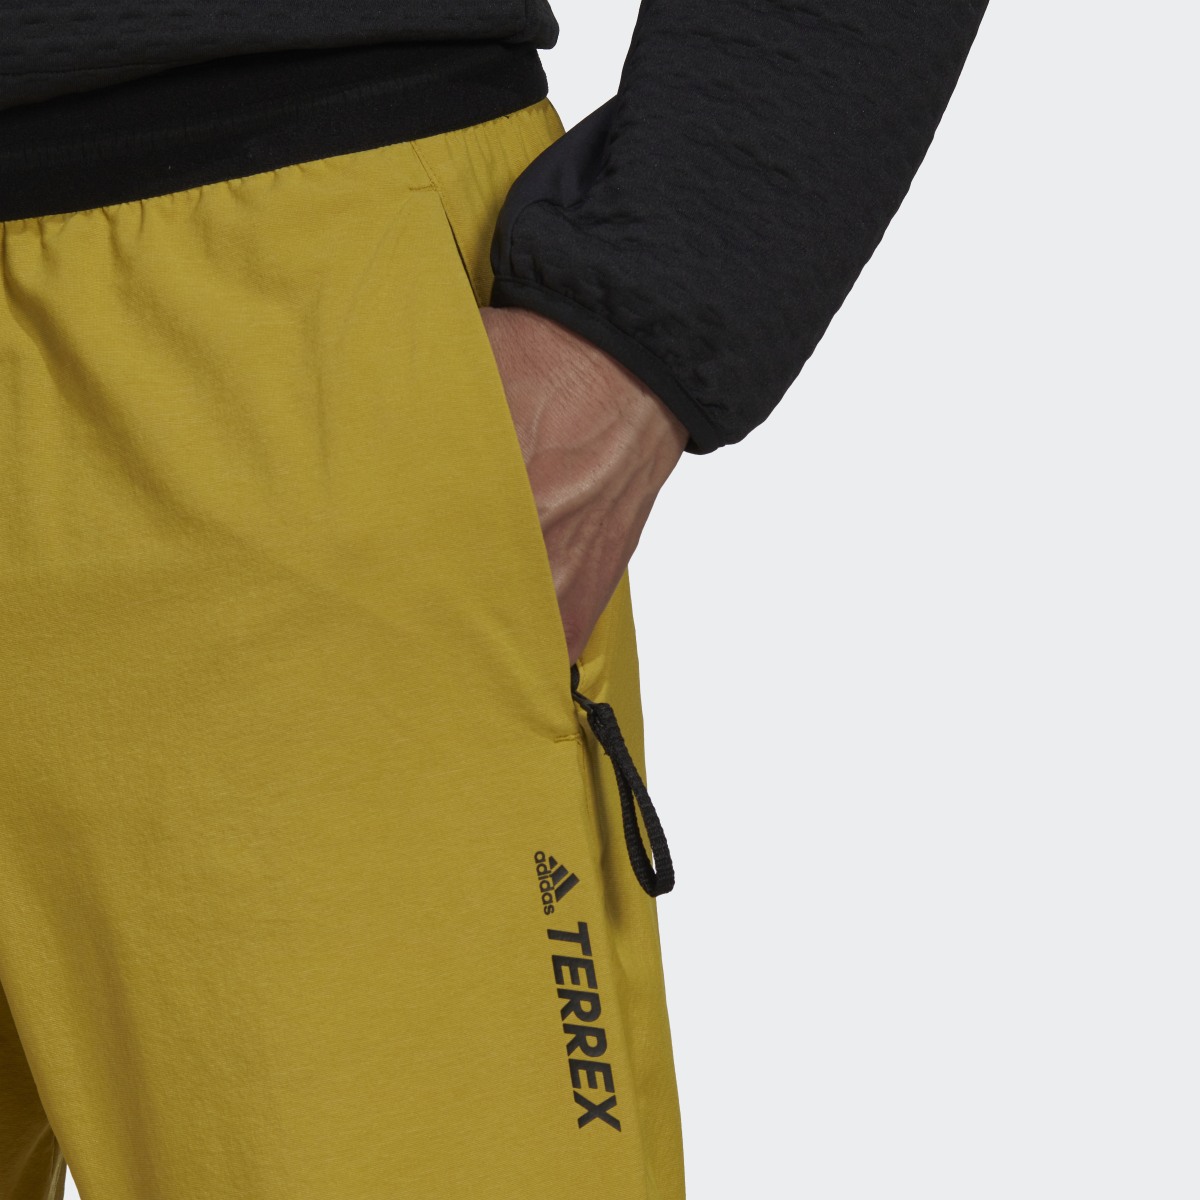 Adidas Terrex Liteflex Hiking Pants. 8